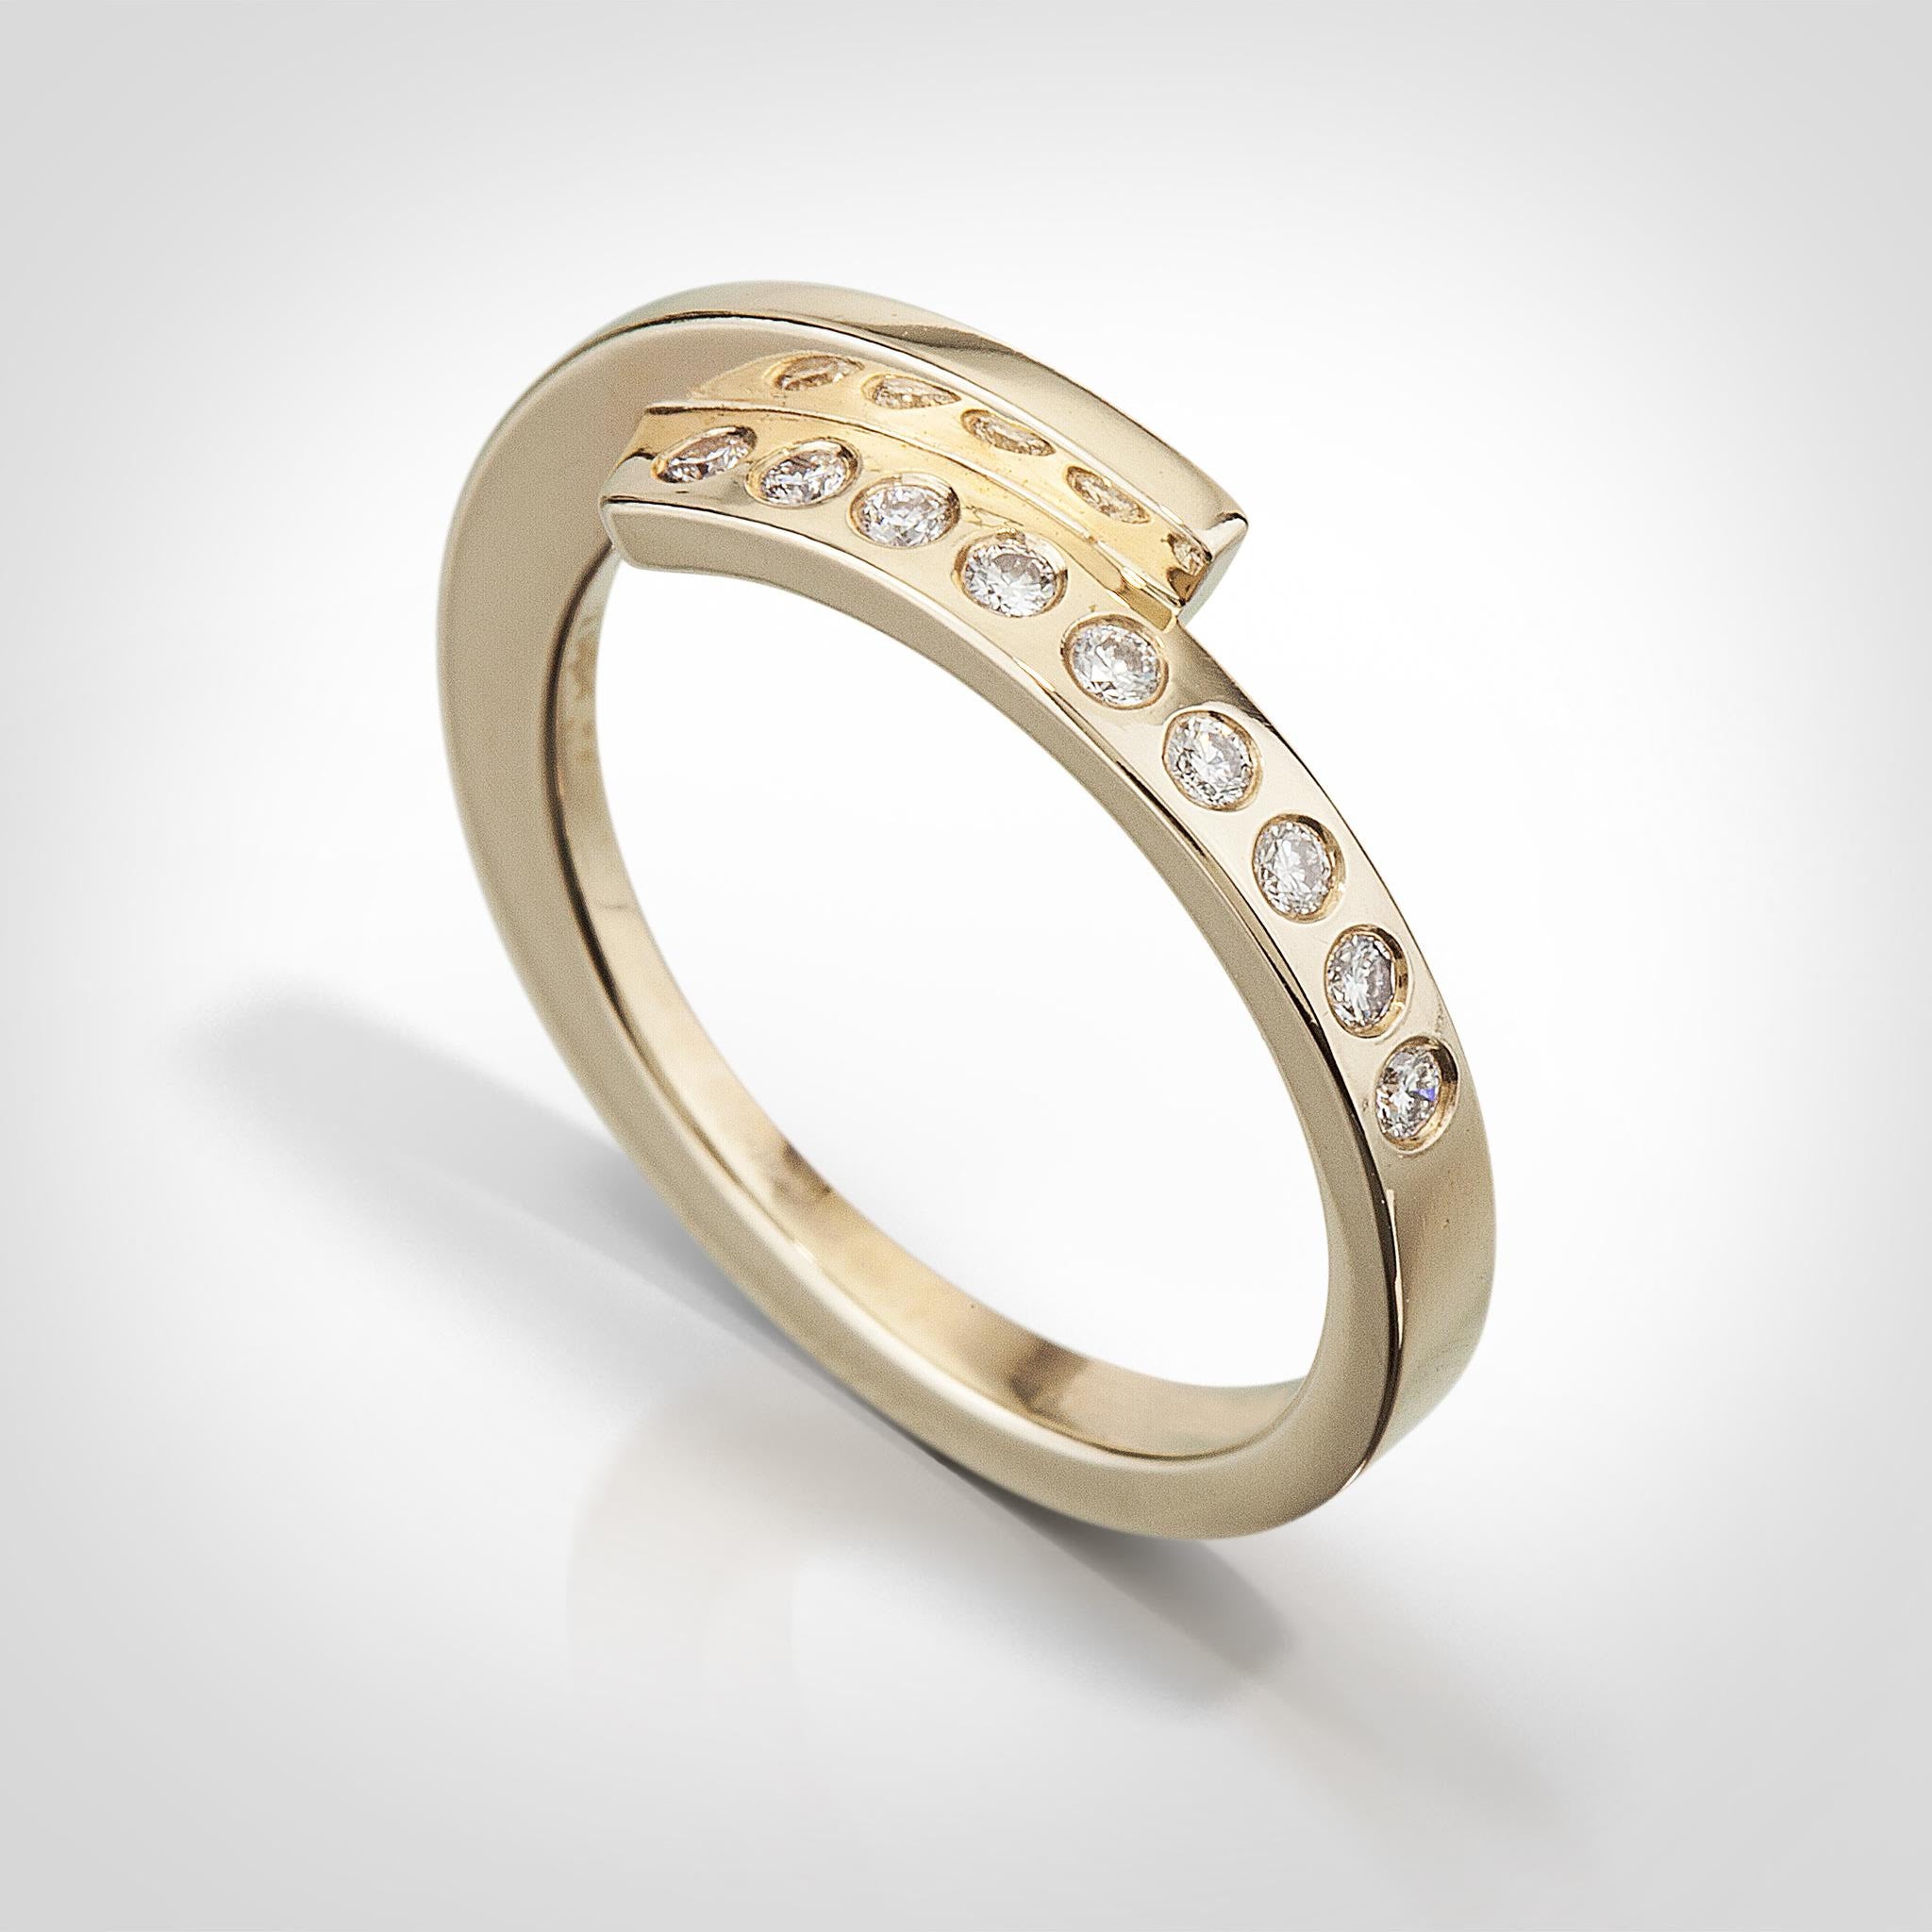 Carlyle-14k yellow gold / diamonds-Custom ring